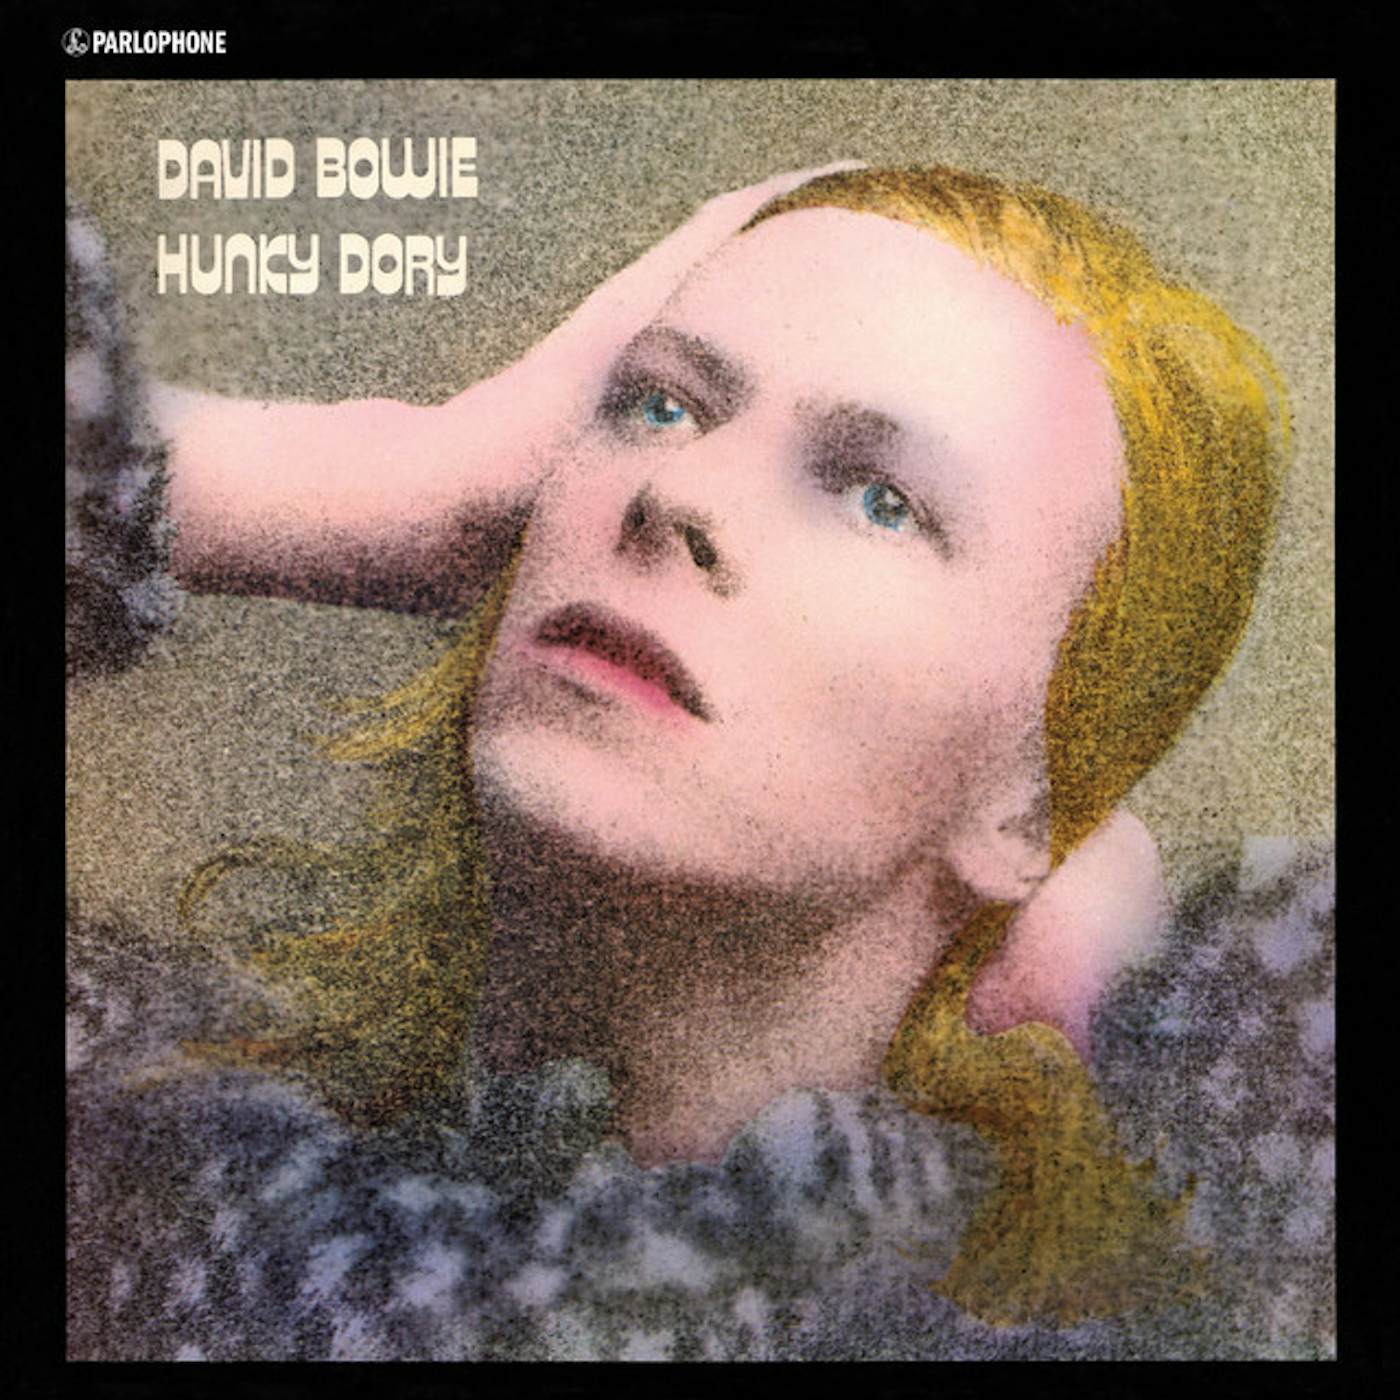 David Bowie Hunky Dory Vinyl Record